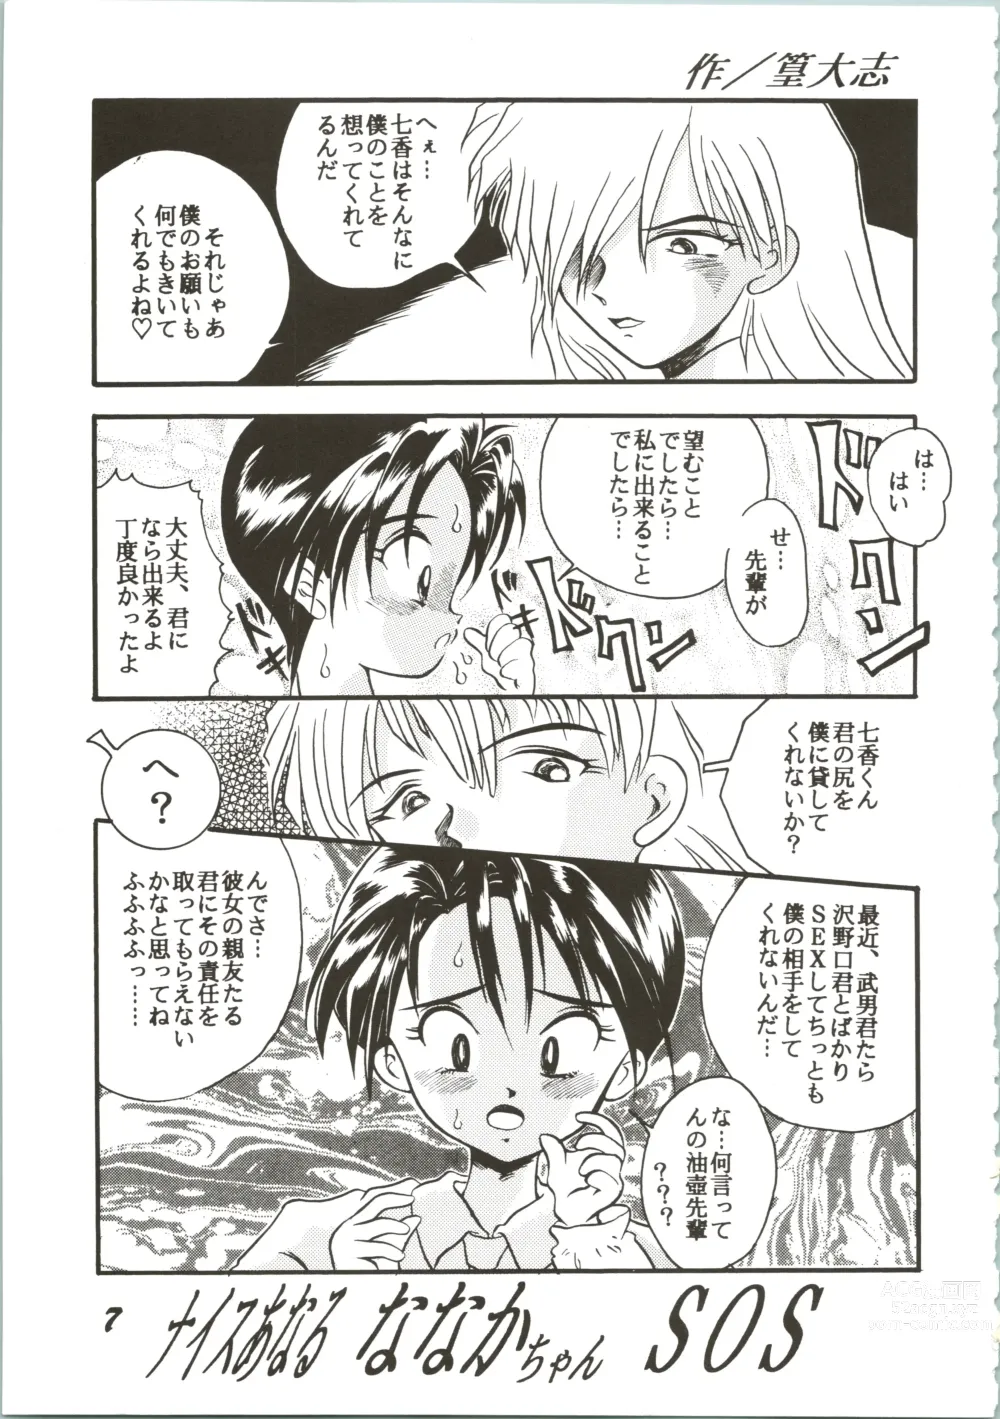 Page 7 of doujinshi OVA SPIRITS